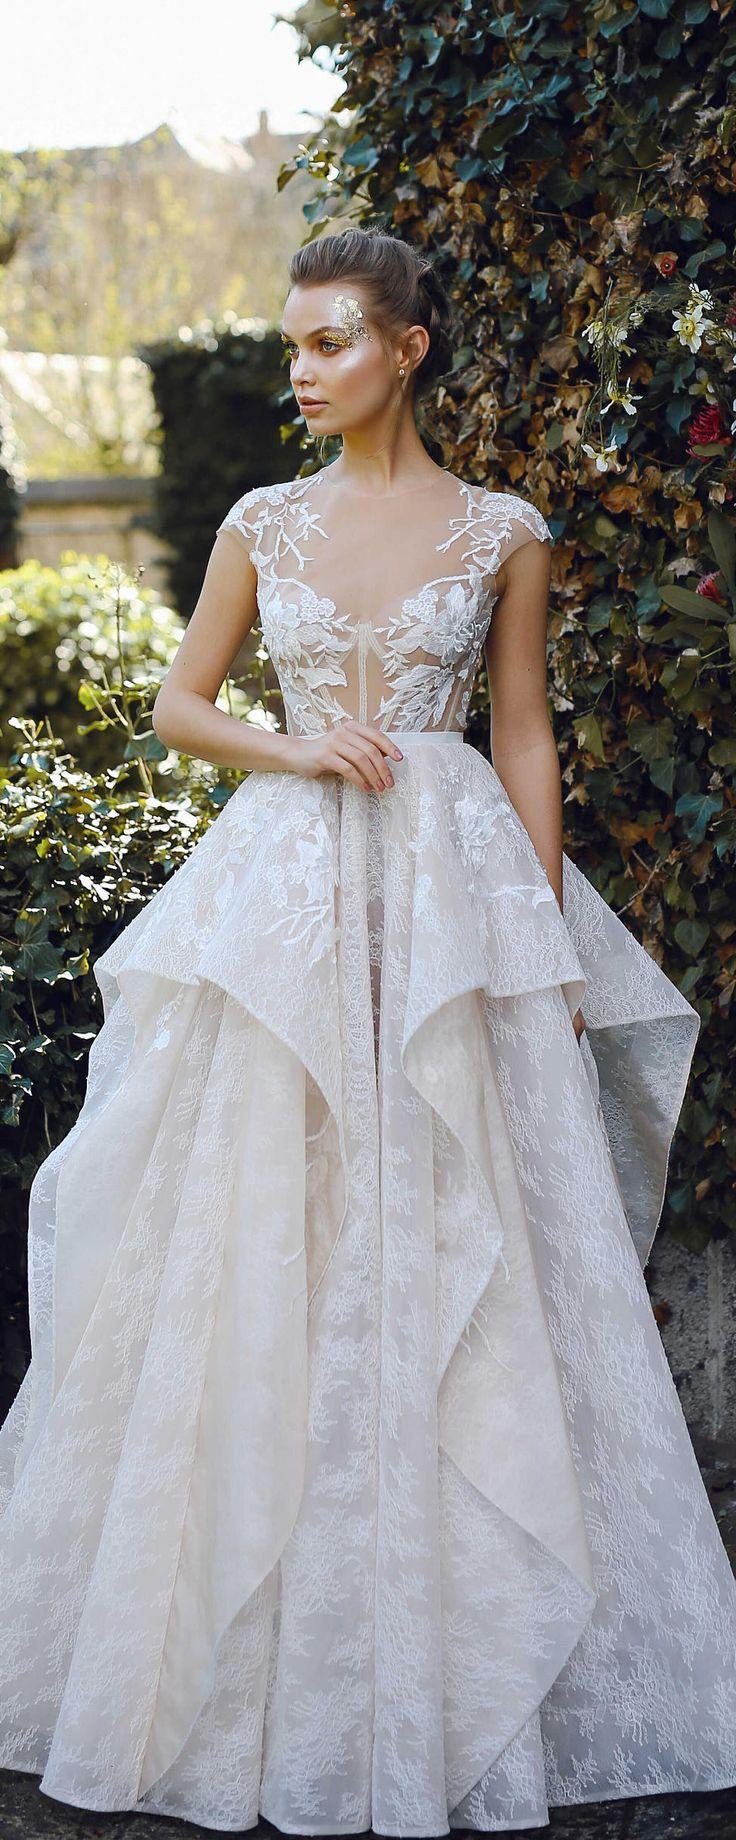 زفاف - Wedding Dress JANEL, A-line Wedding Dress, Lace Wedding Dress